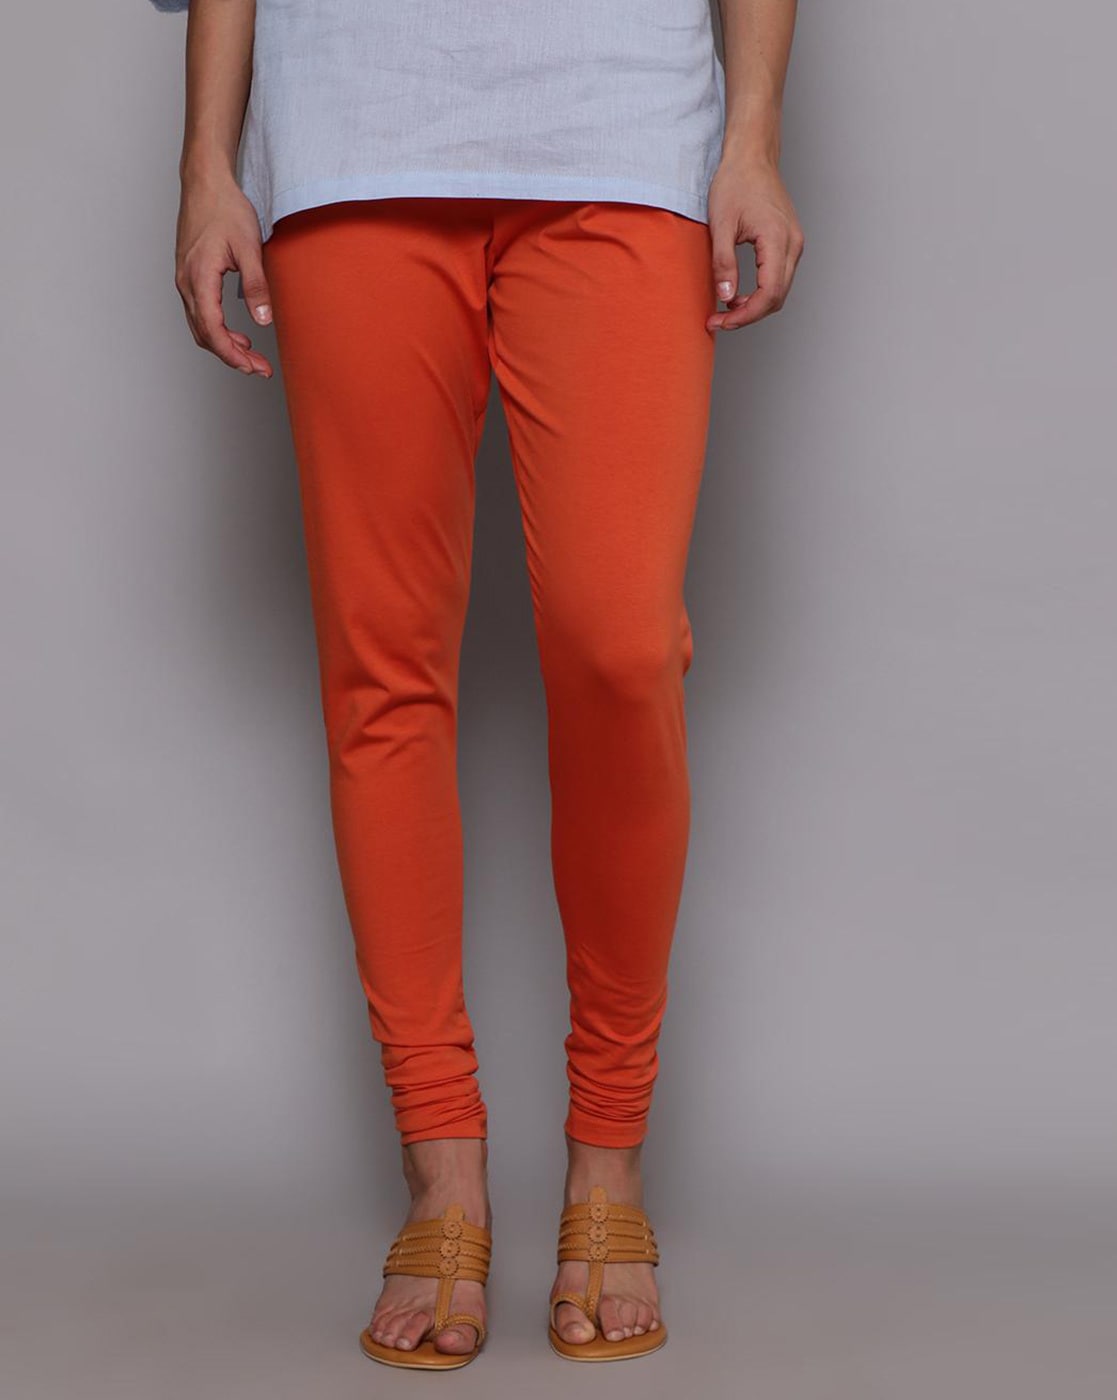 Buy TAG 7 Orange Cotton Leggings for Women Online @ Tata CLiQ